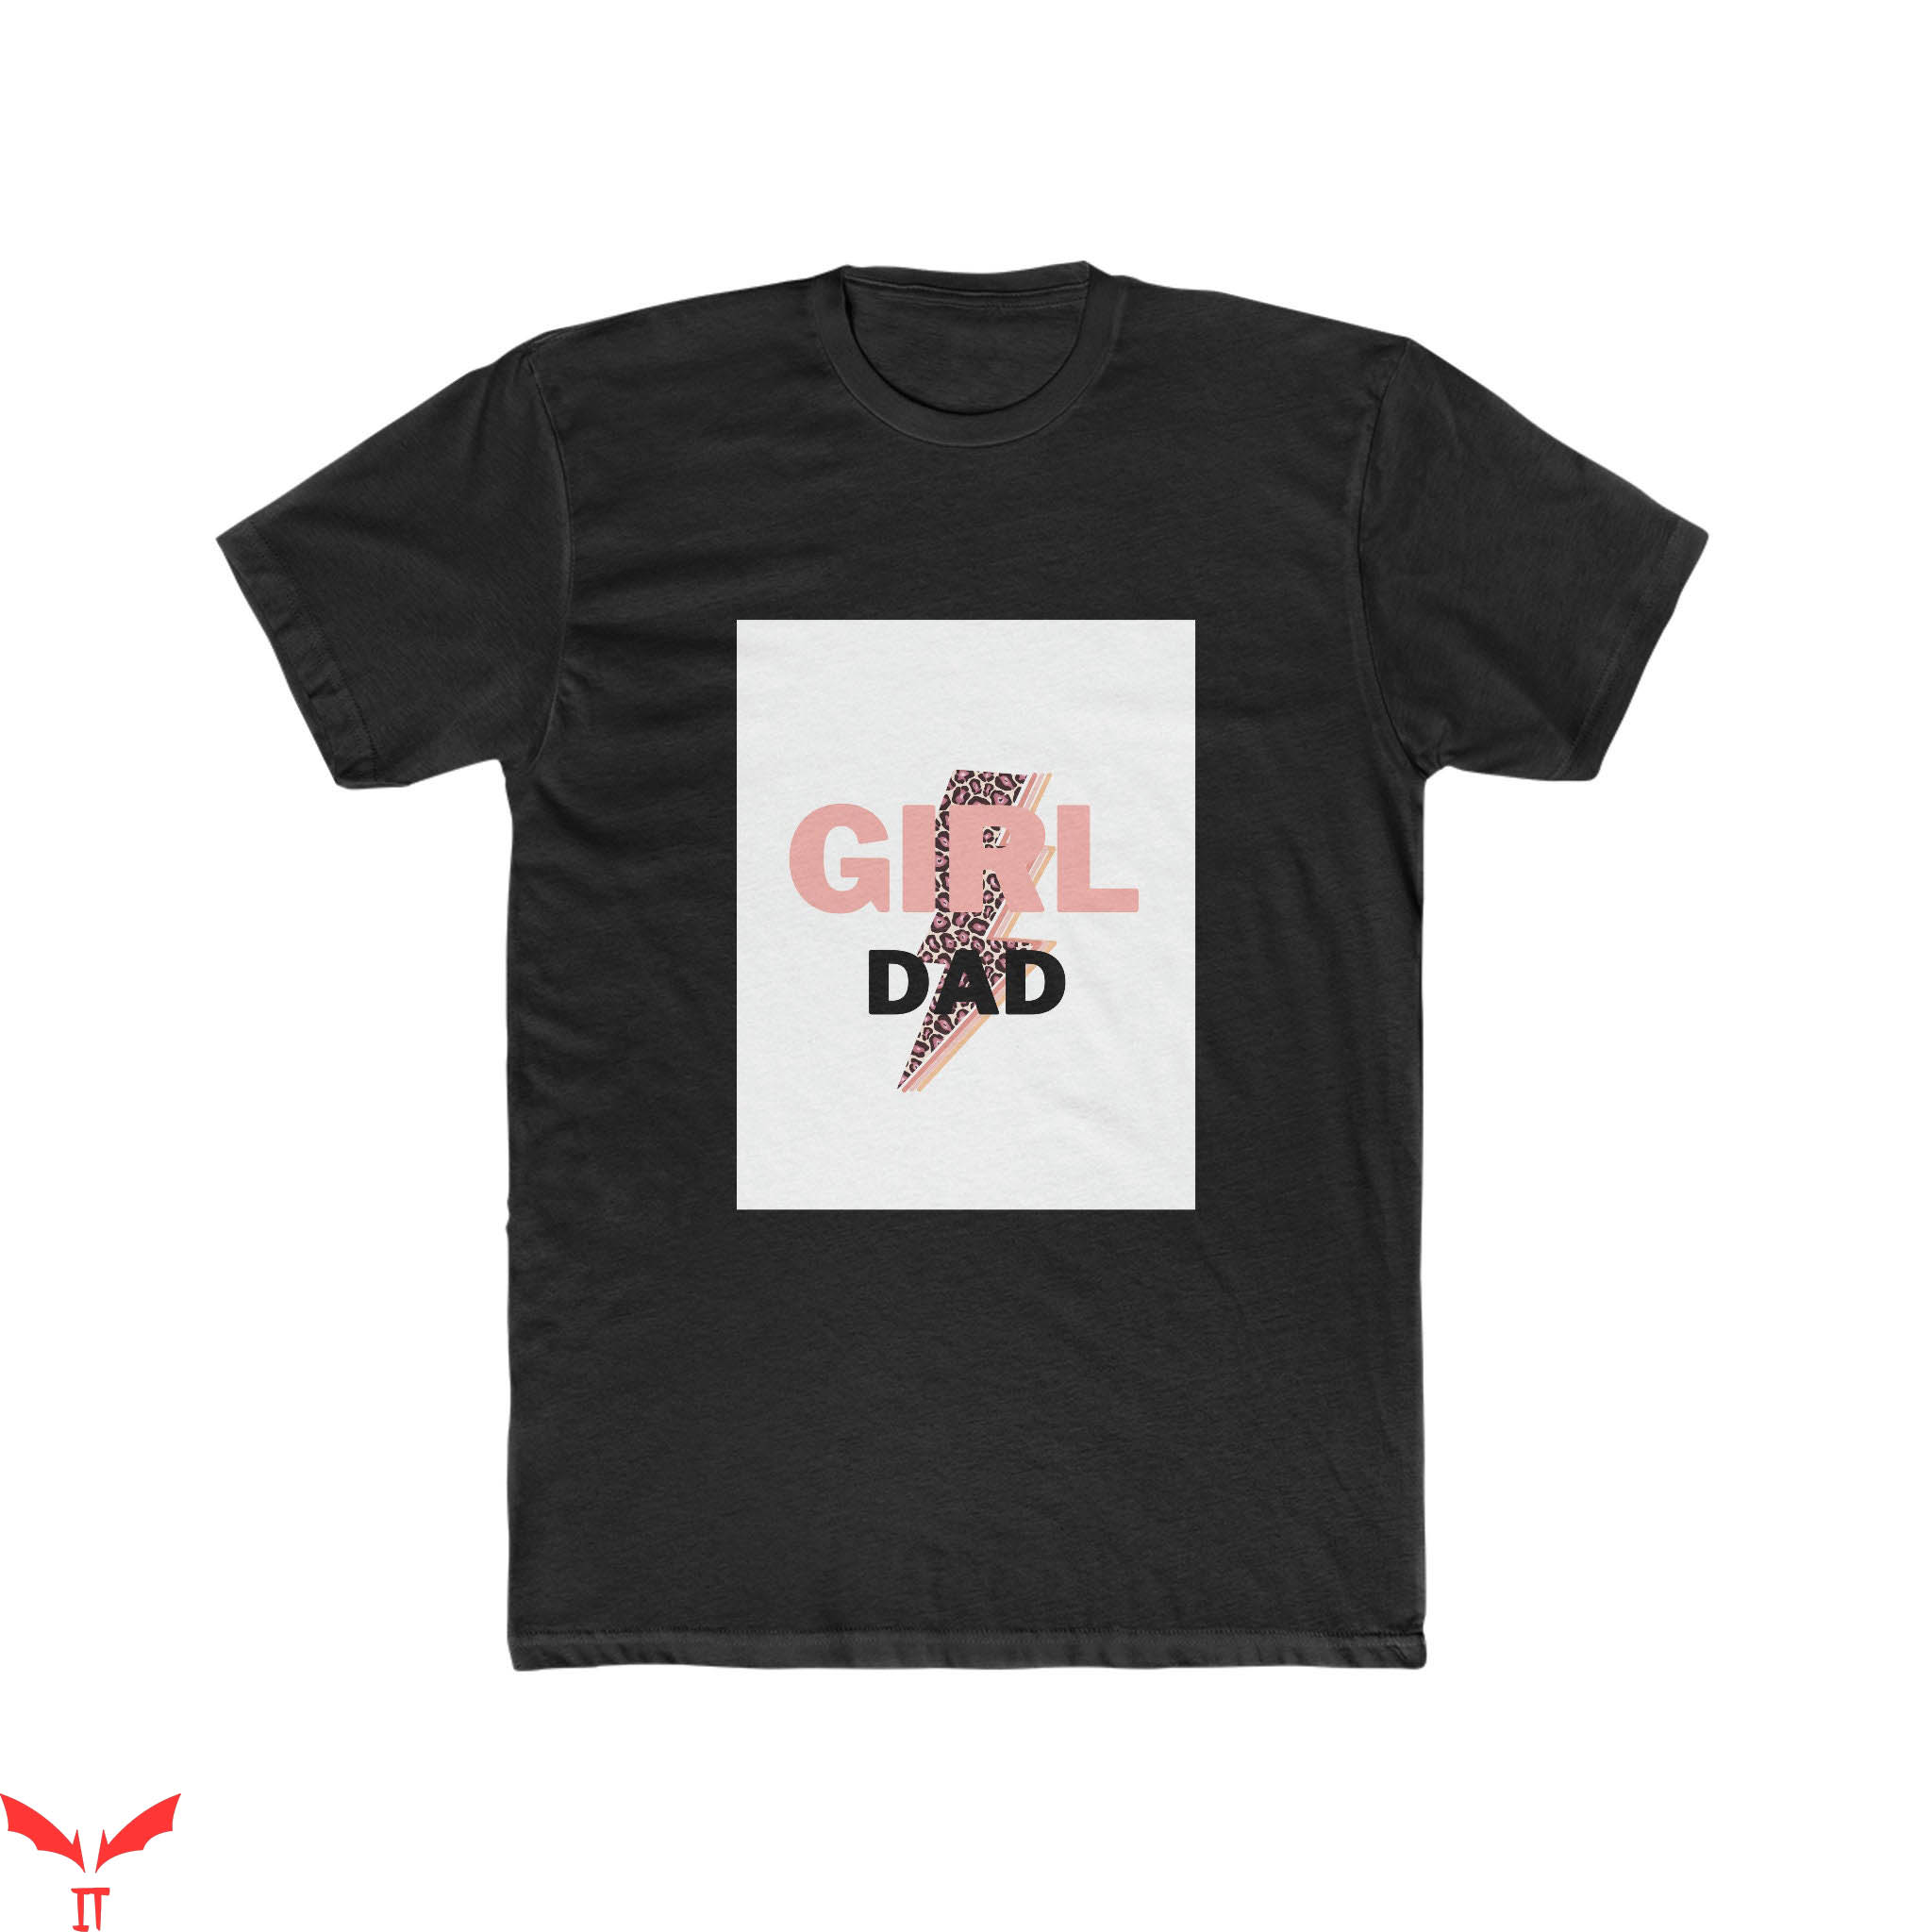 Girl Dad T-Shirt Girl Dad Artwork Creative T-Shirt